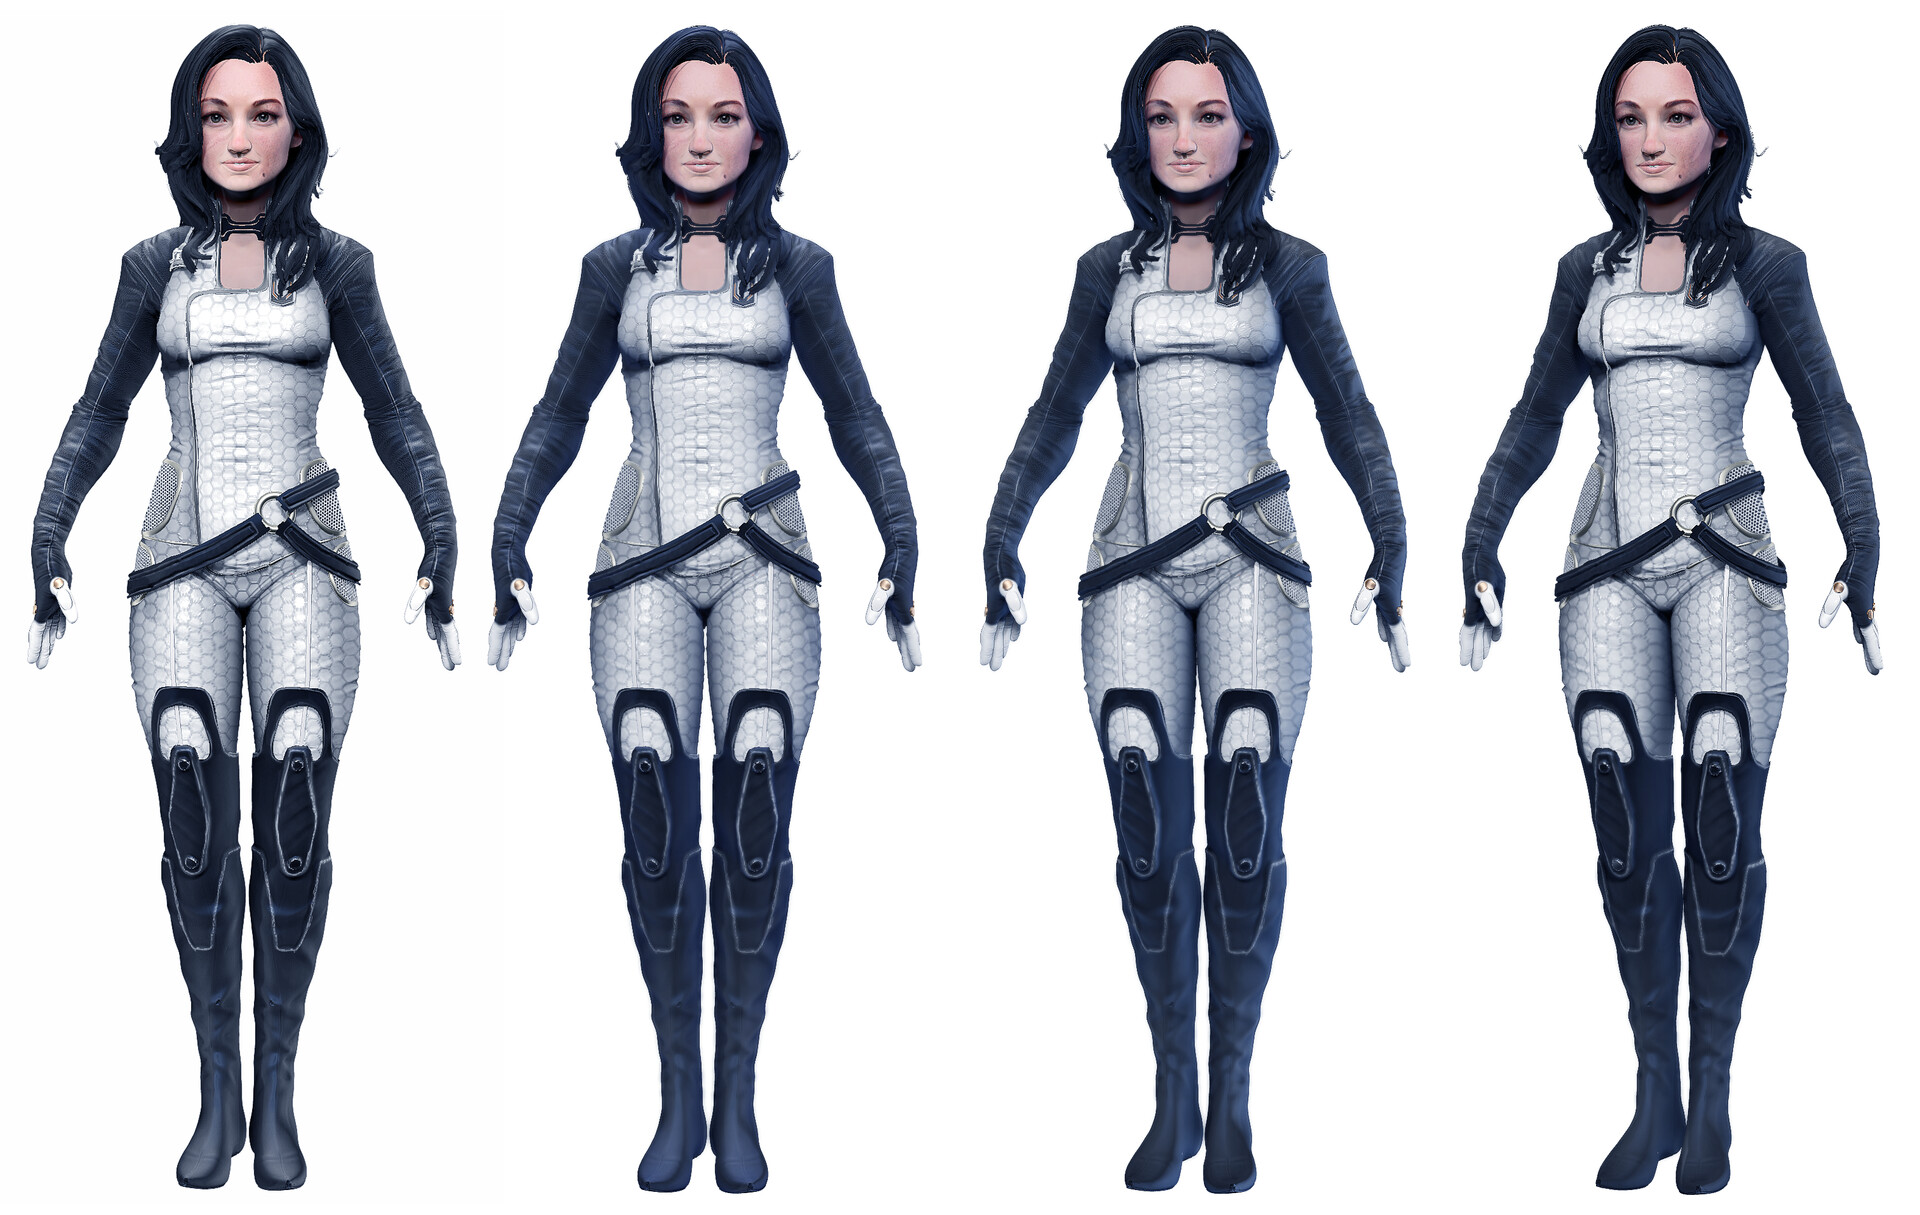 I had no idea Miranda (Mass Effect) was modeled after a real